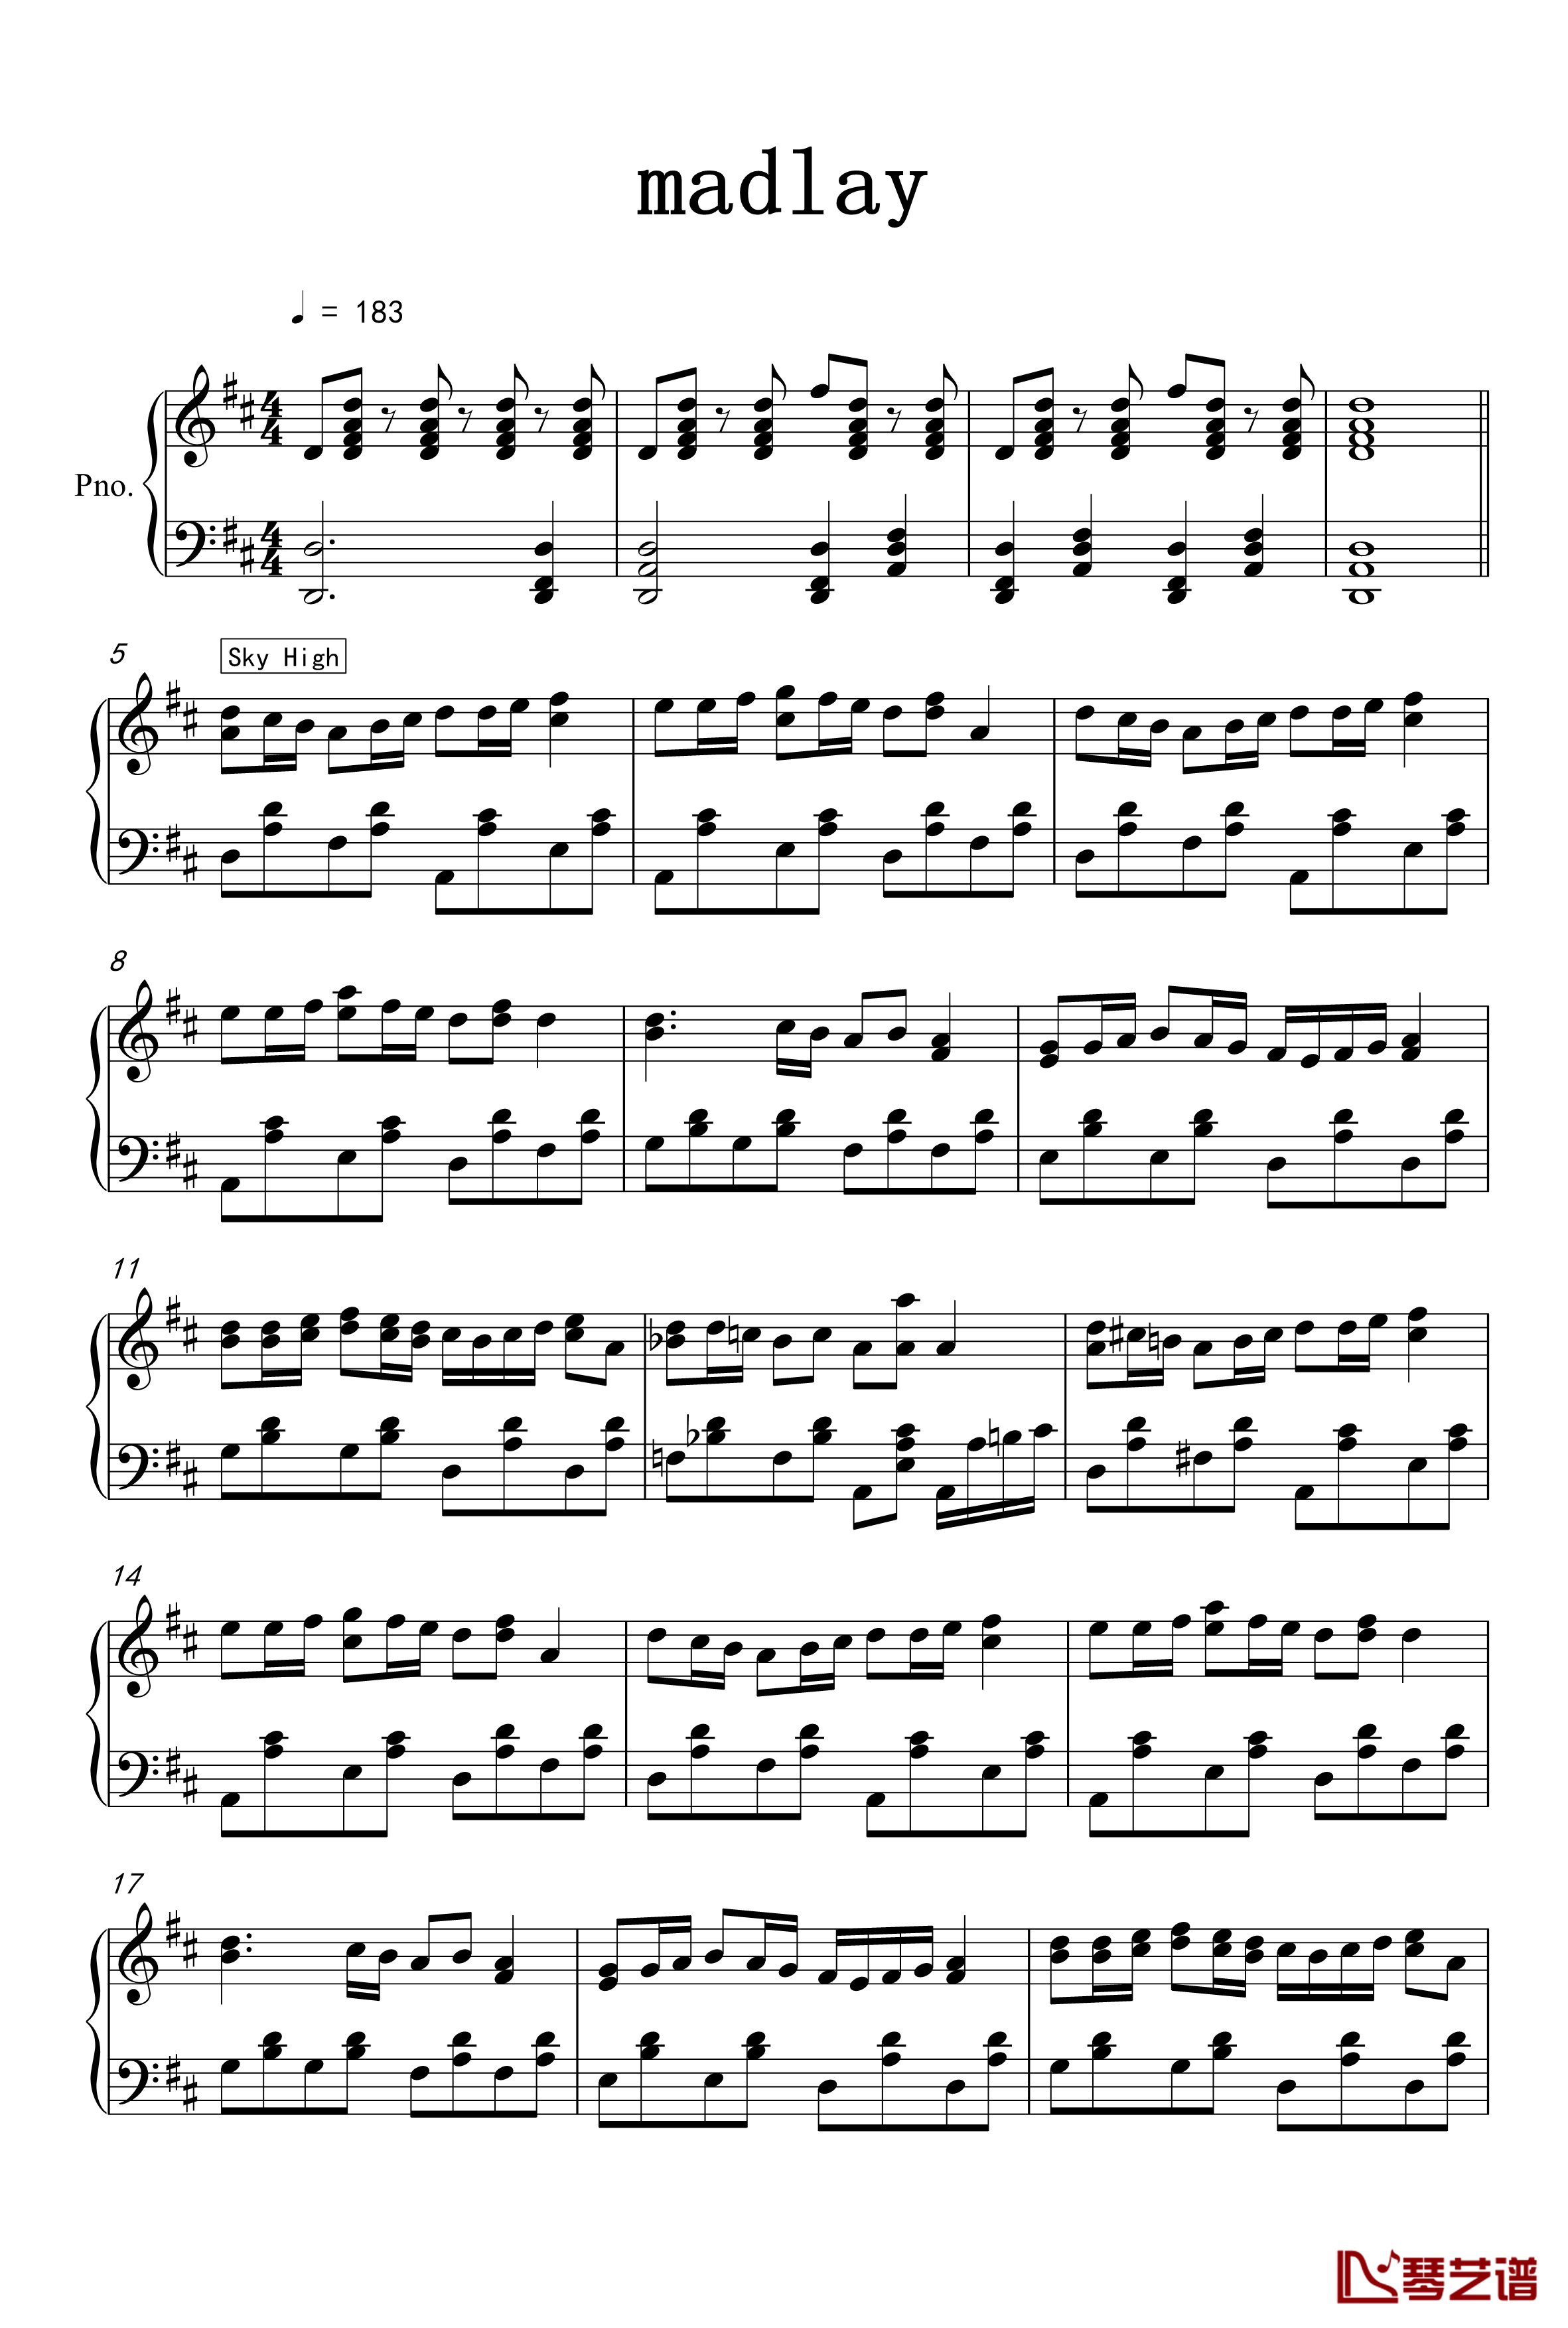 madlay组曲钢琴谱-niconico1